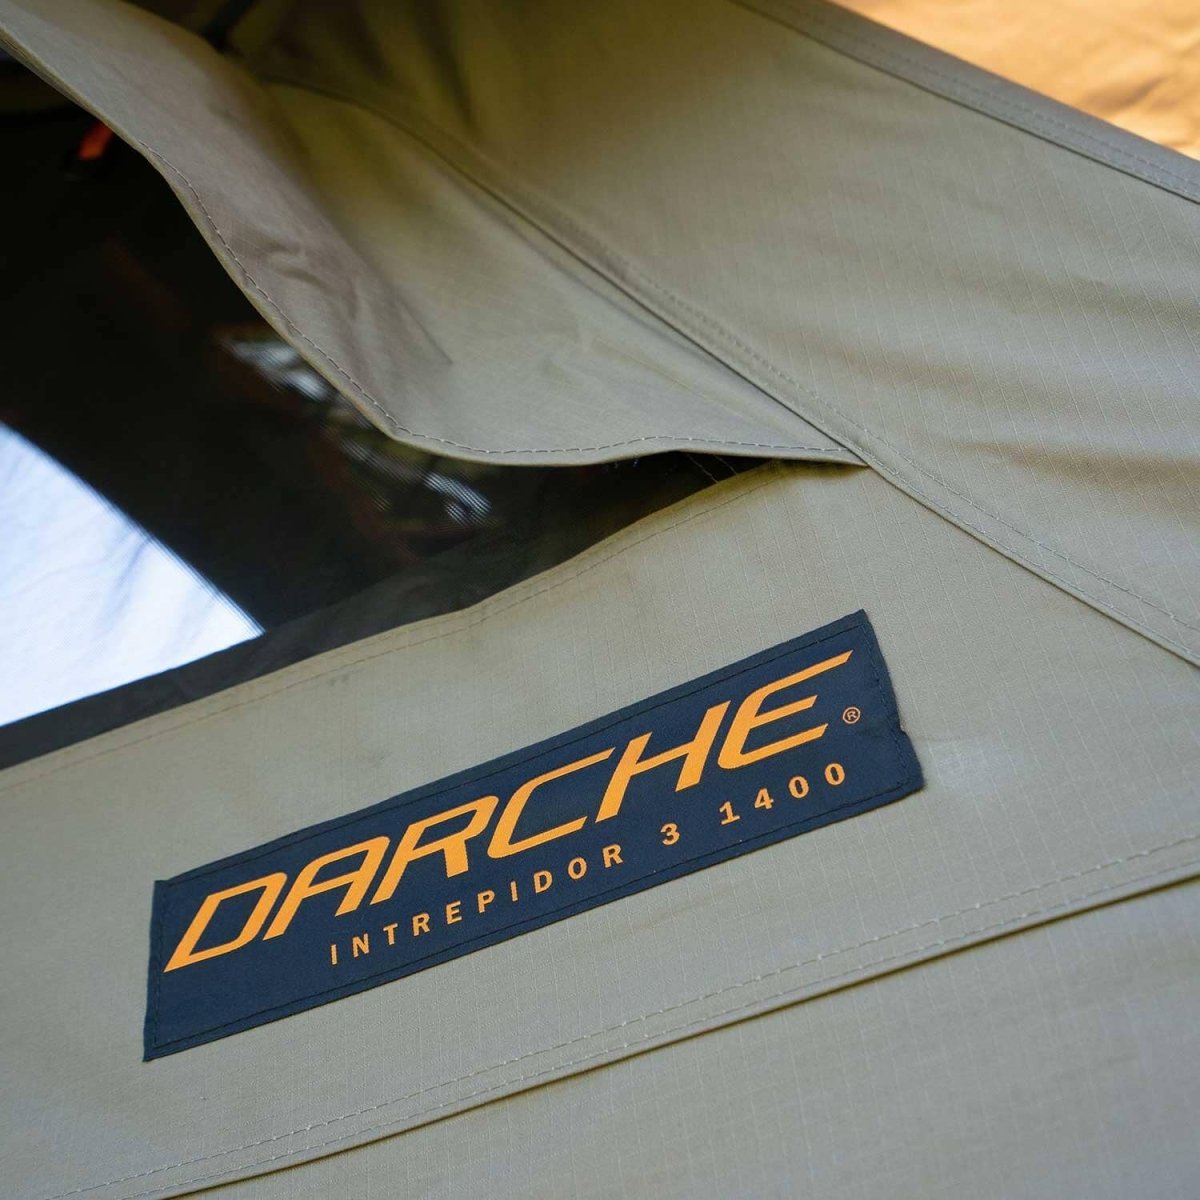 Darche INTREPIDOR 3 1400 Tourer Roof Top Tent - NZ Offroader